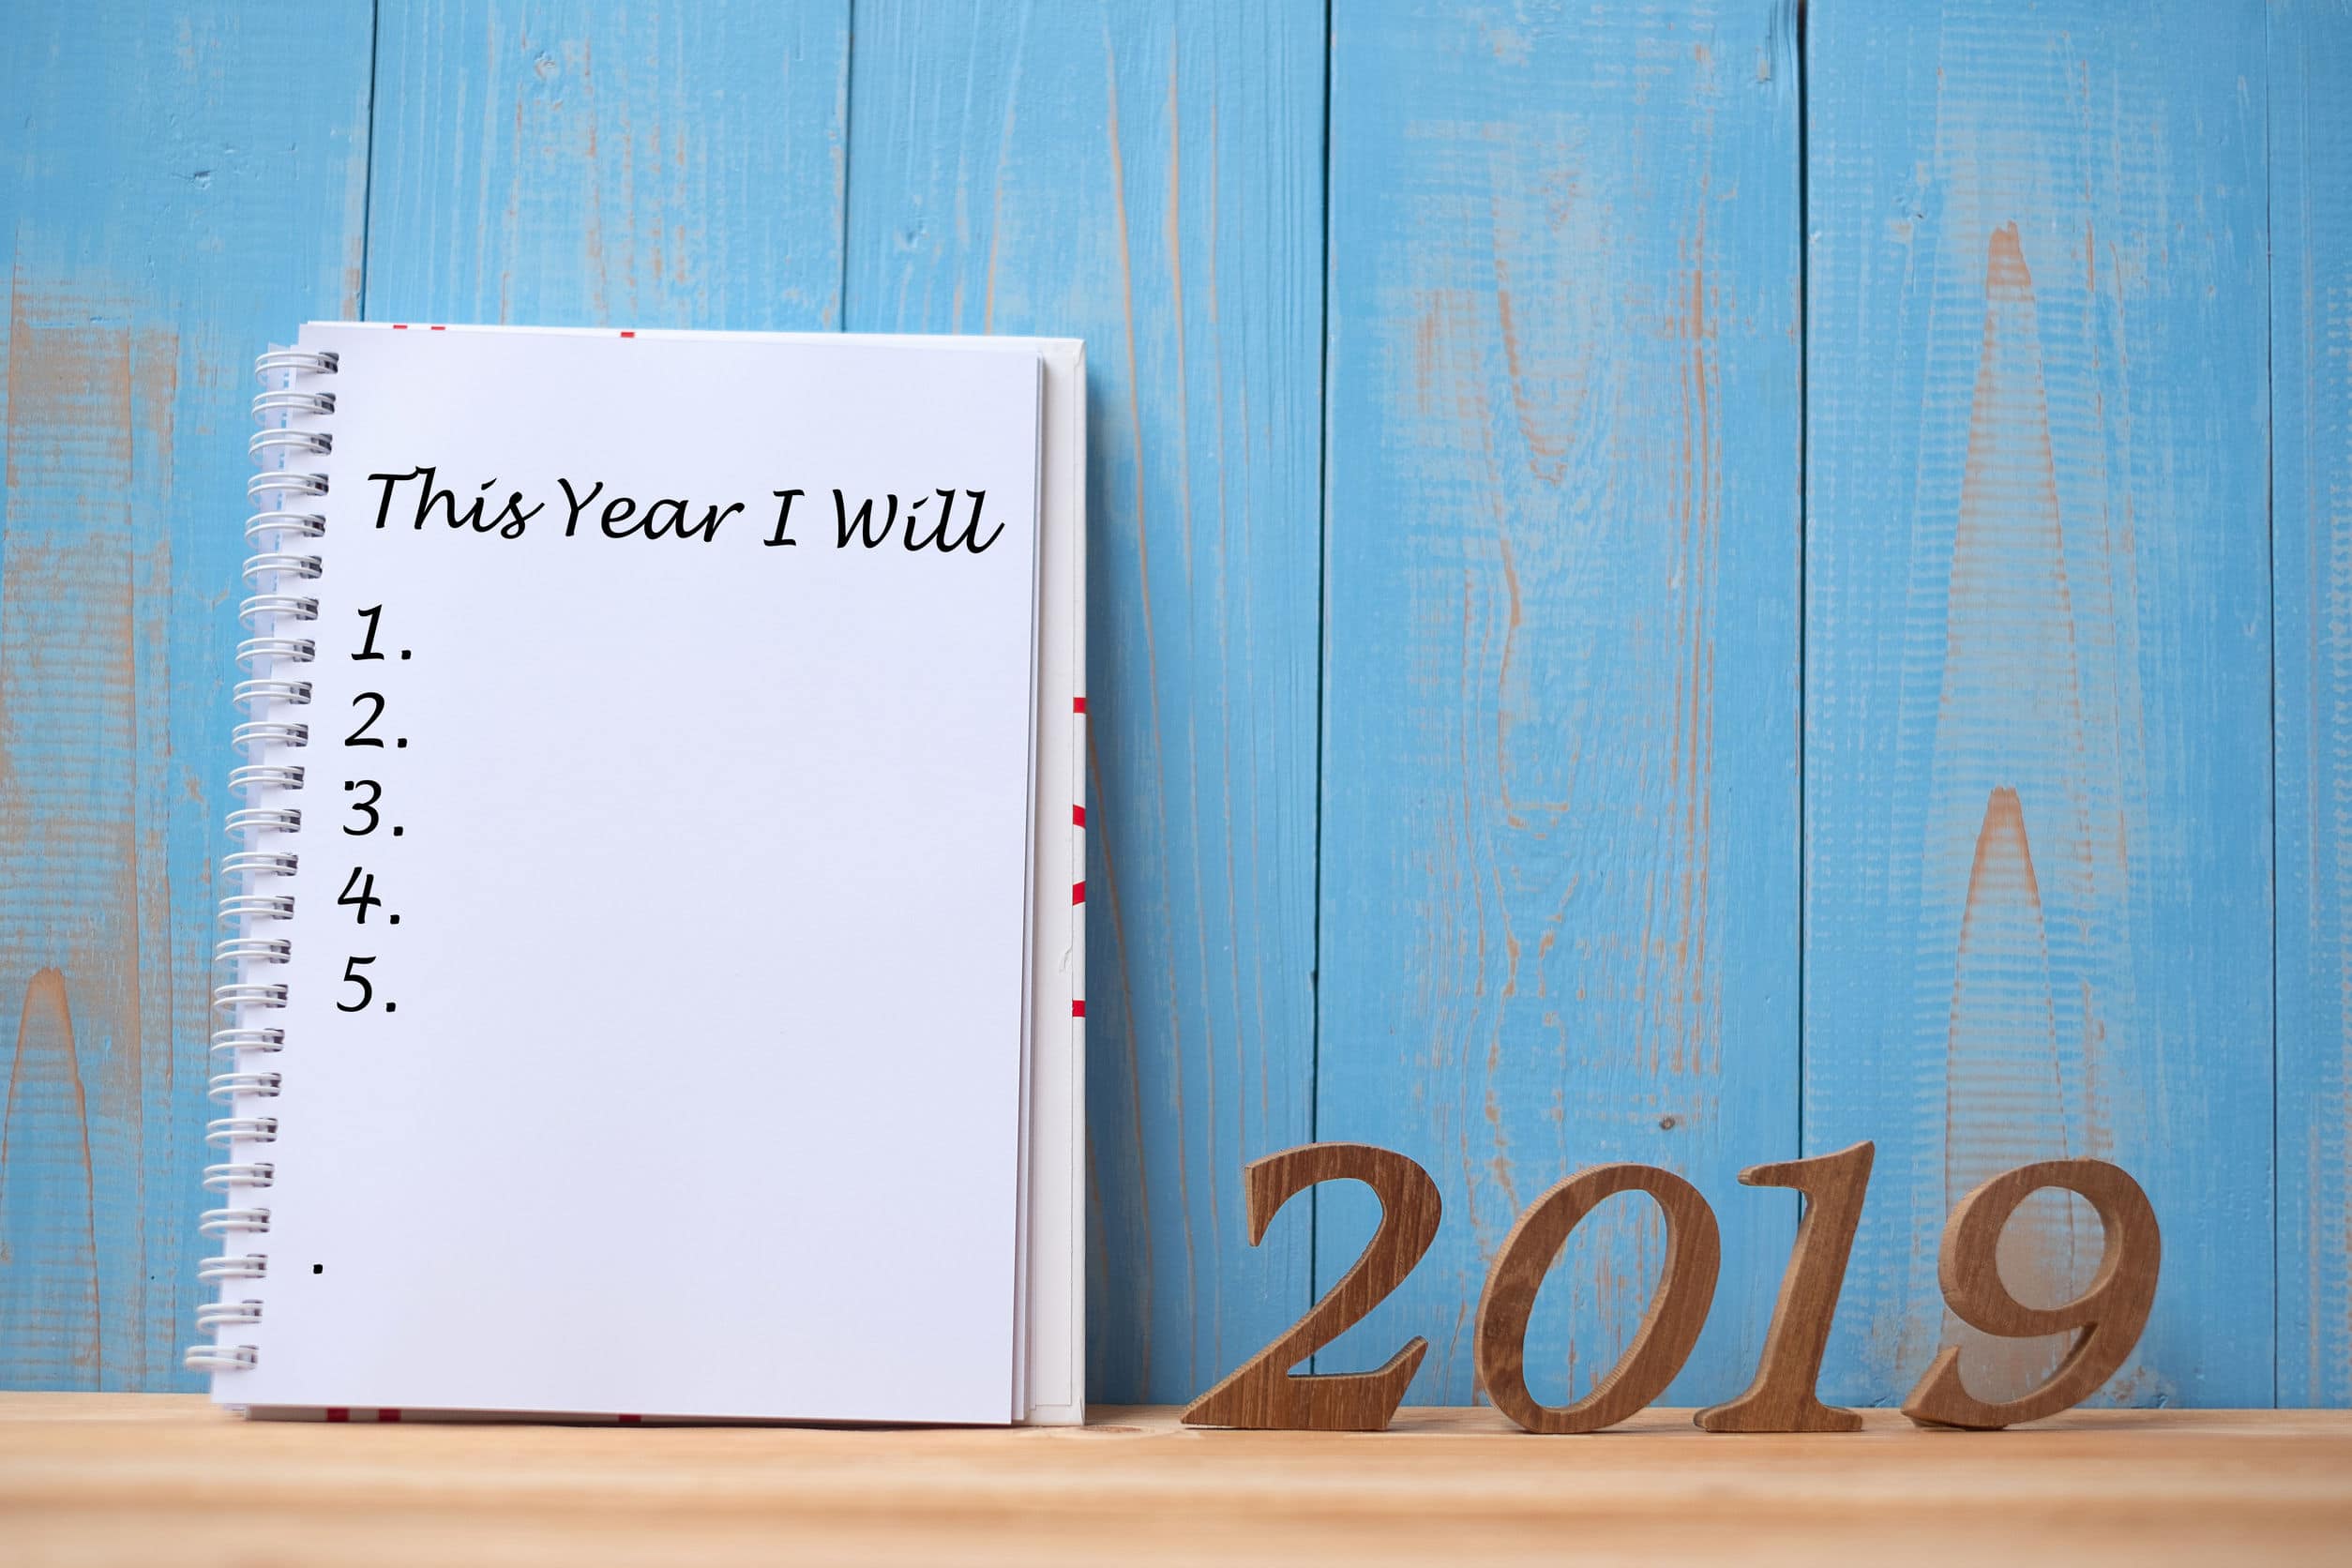 This year i want. This year i will. This year. Будь счастлив! (2019). Еще один год / another year картинки.